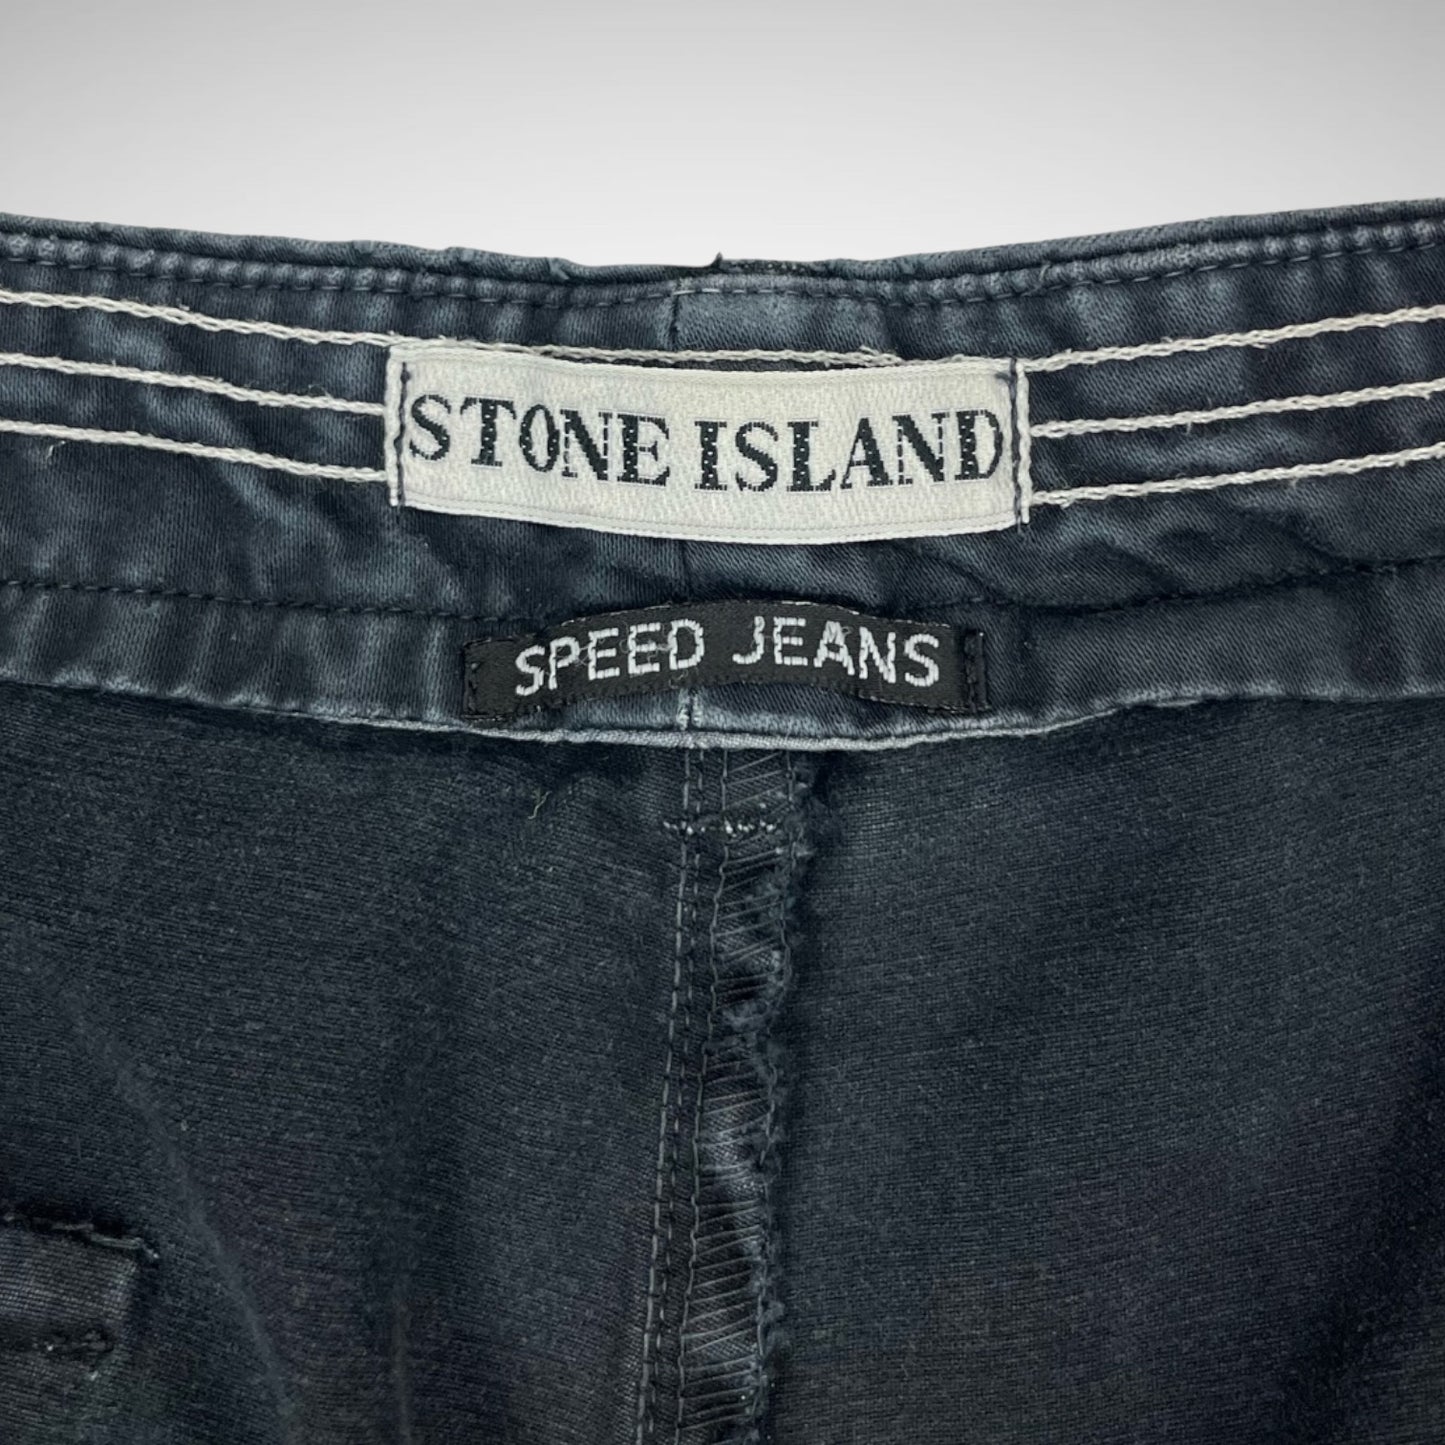 Stone Island Speed Jeans